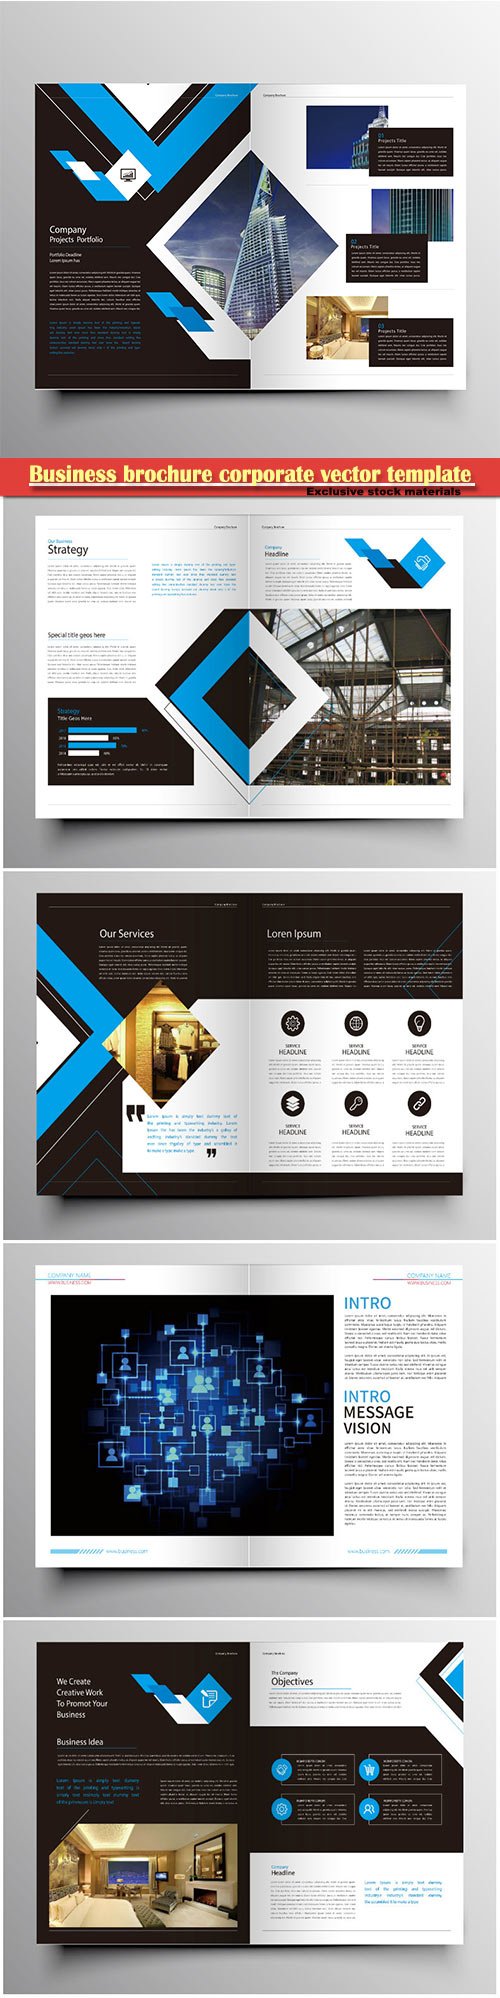 Business brochure corporate vector template # 40